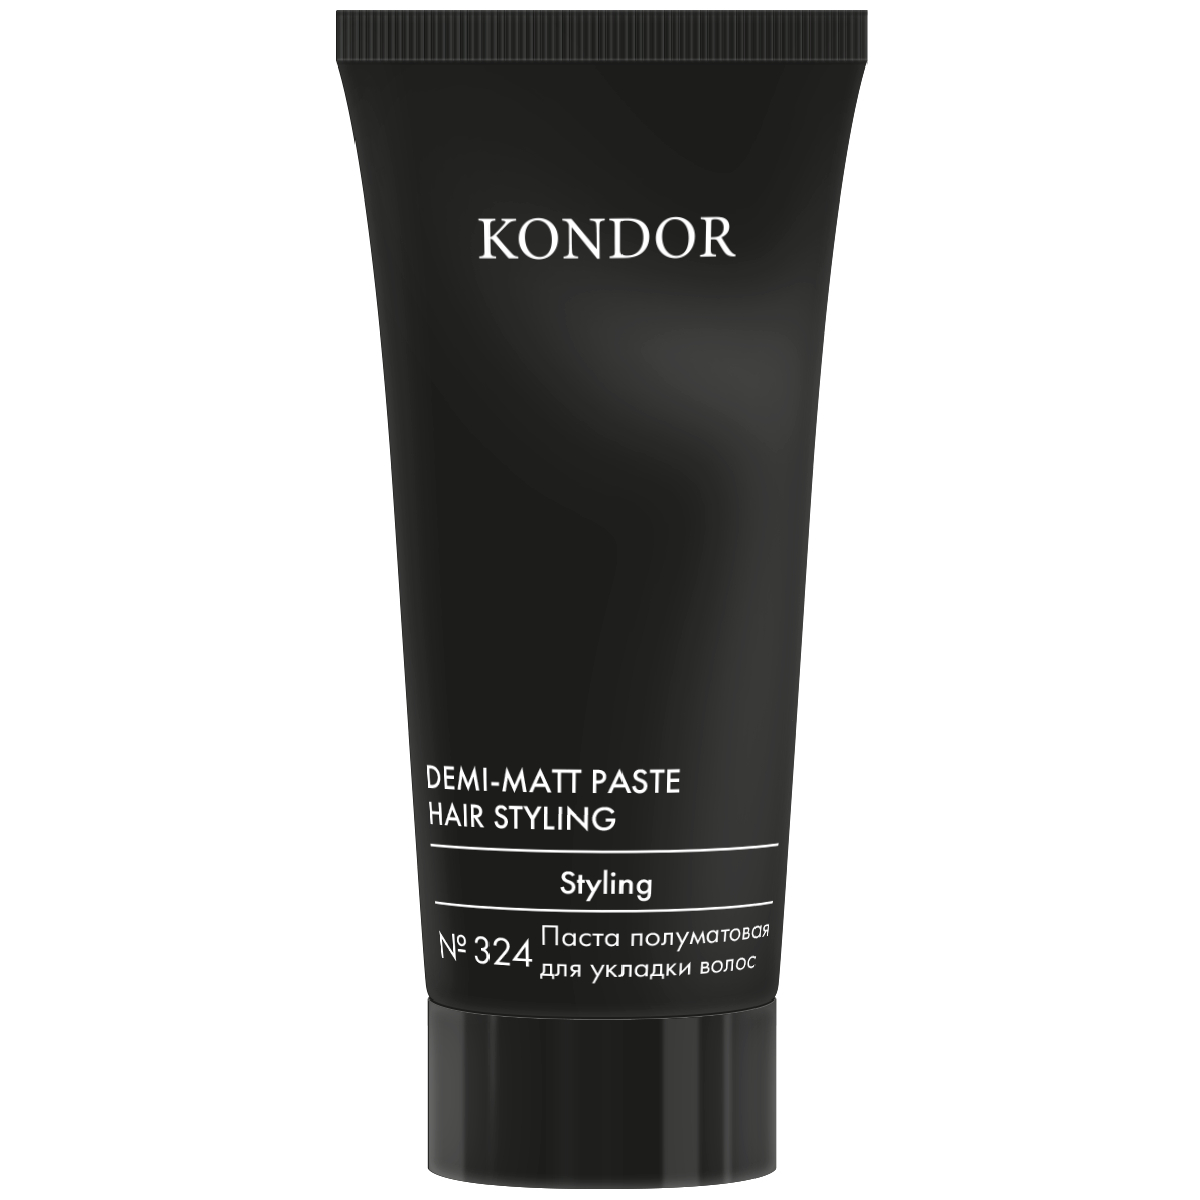 Kondor Паста полуматовая для укладки волос Demi-Matt Paste № 324, 50 мл (Kondor, Re Style)